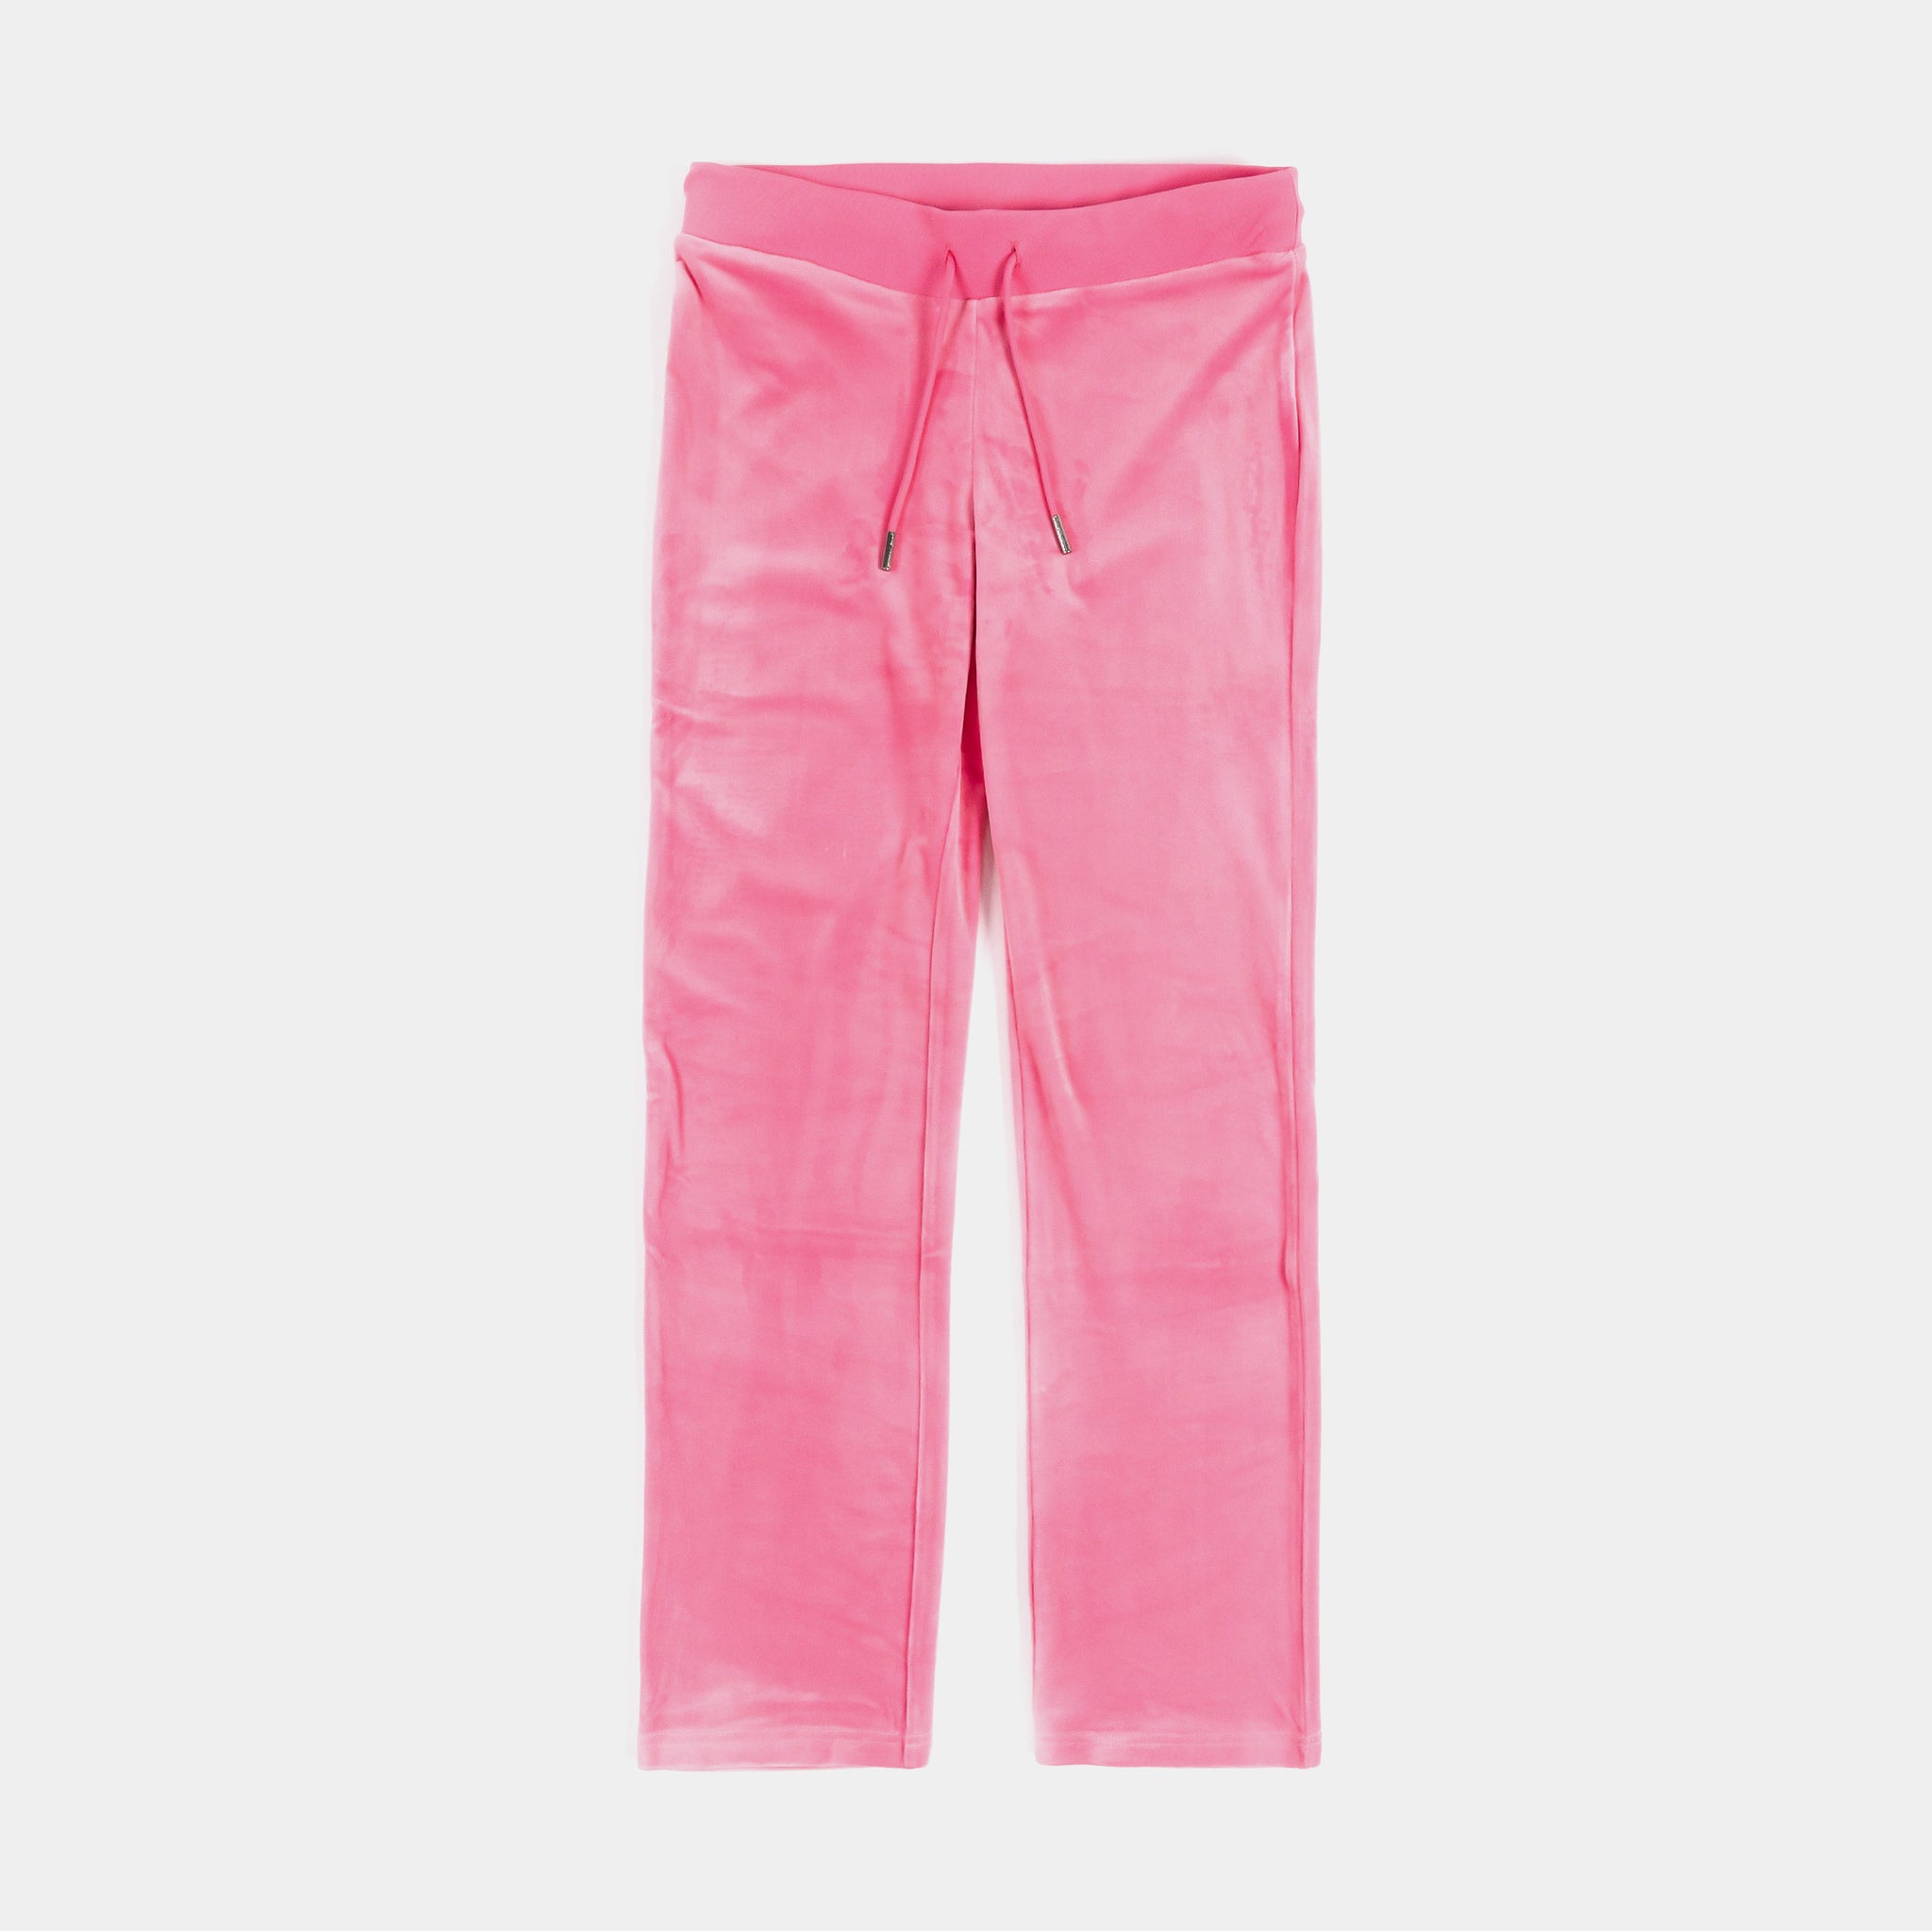 Juicy couture pink sweatpants - Gem